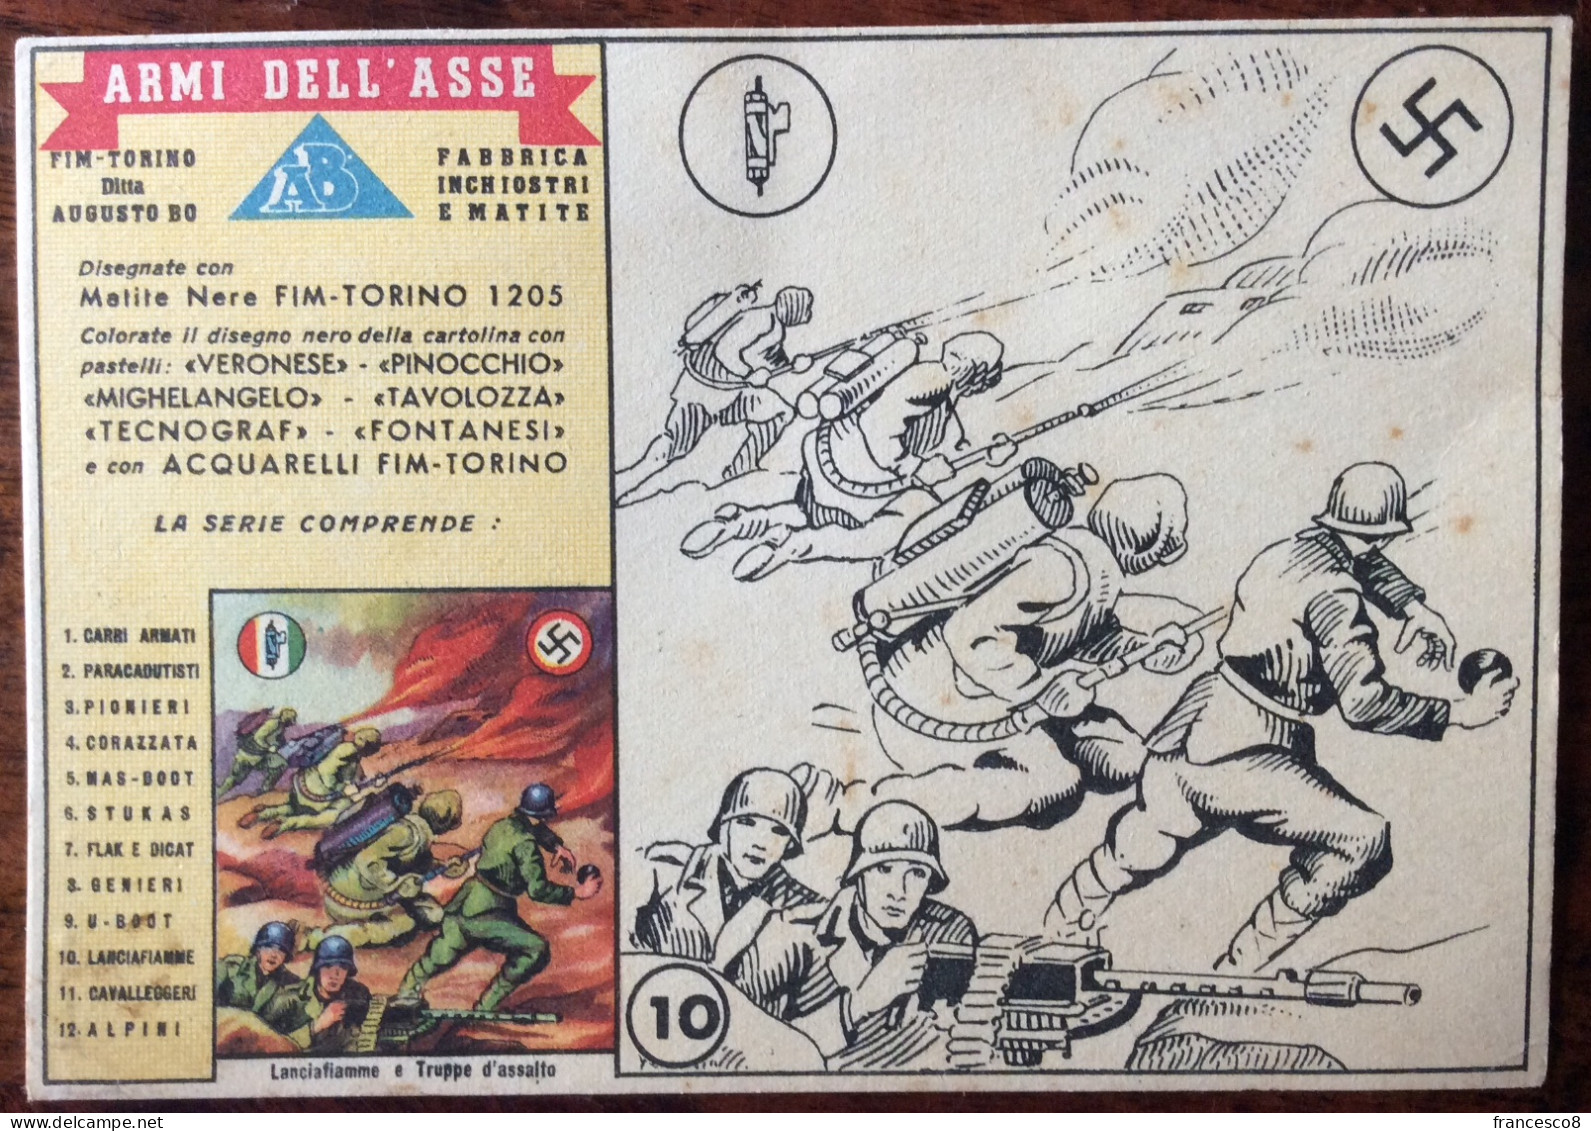 ARMI DELL'ASSE LANCIAFIAMME E TRUPPE D'ASSALTO / Fascismo - Guerre 1939-45